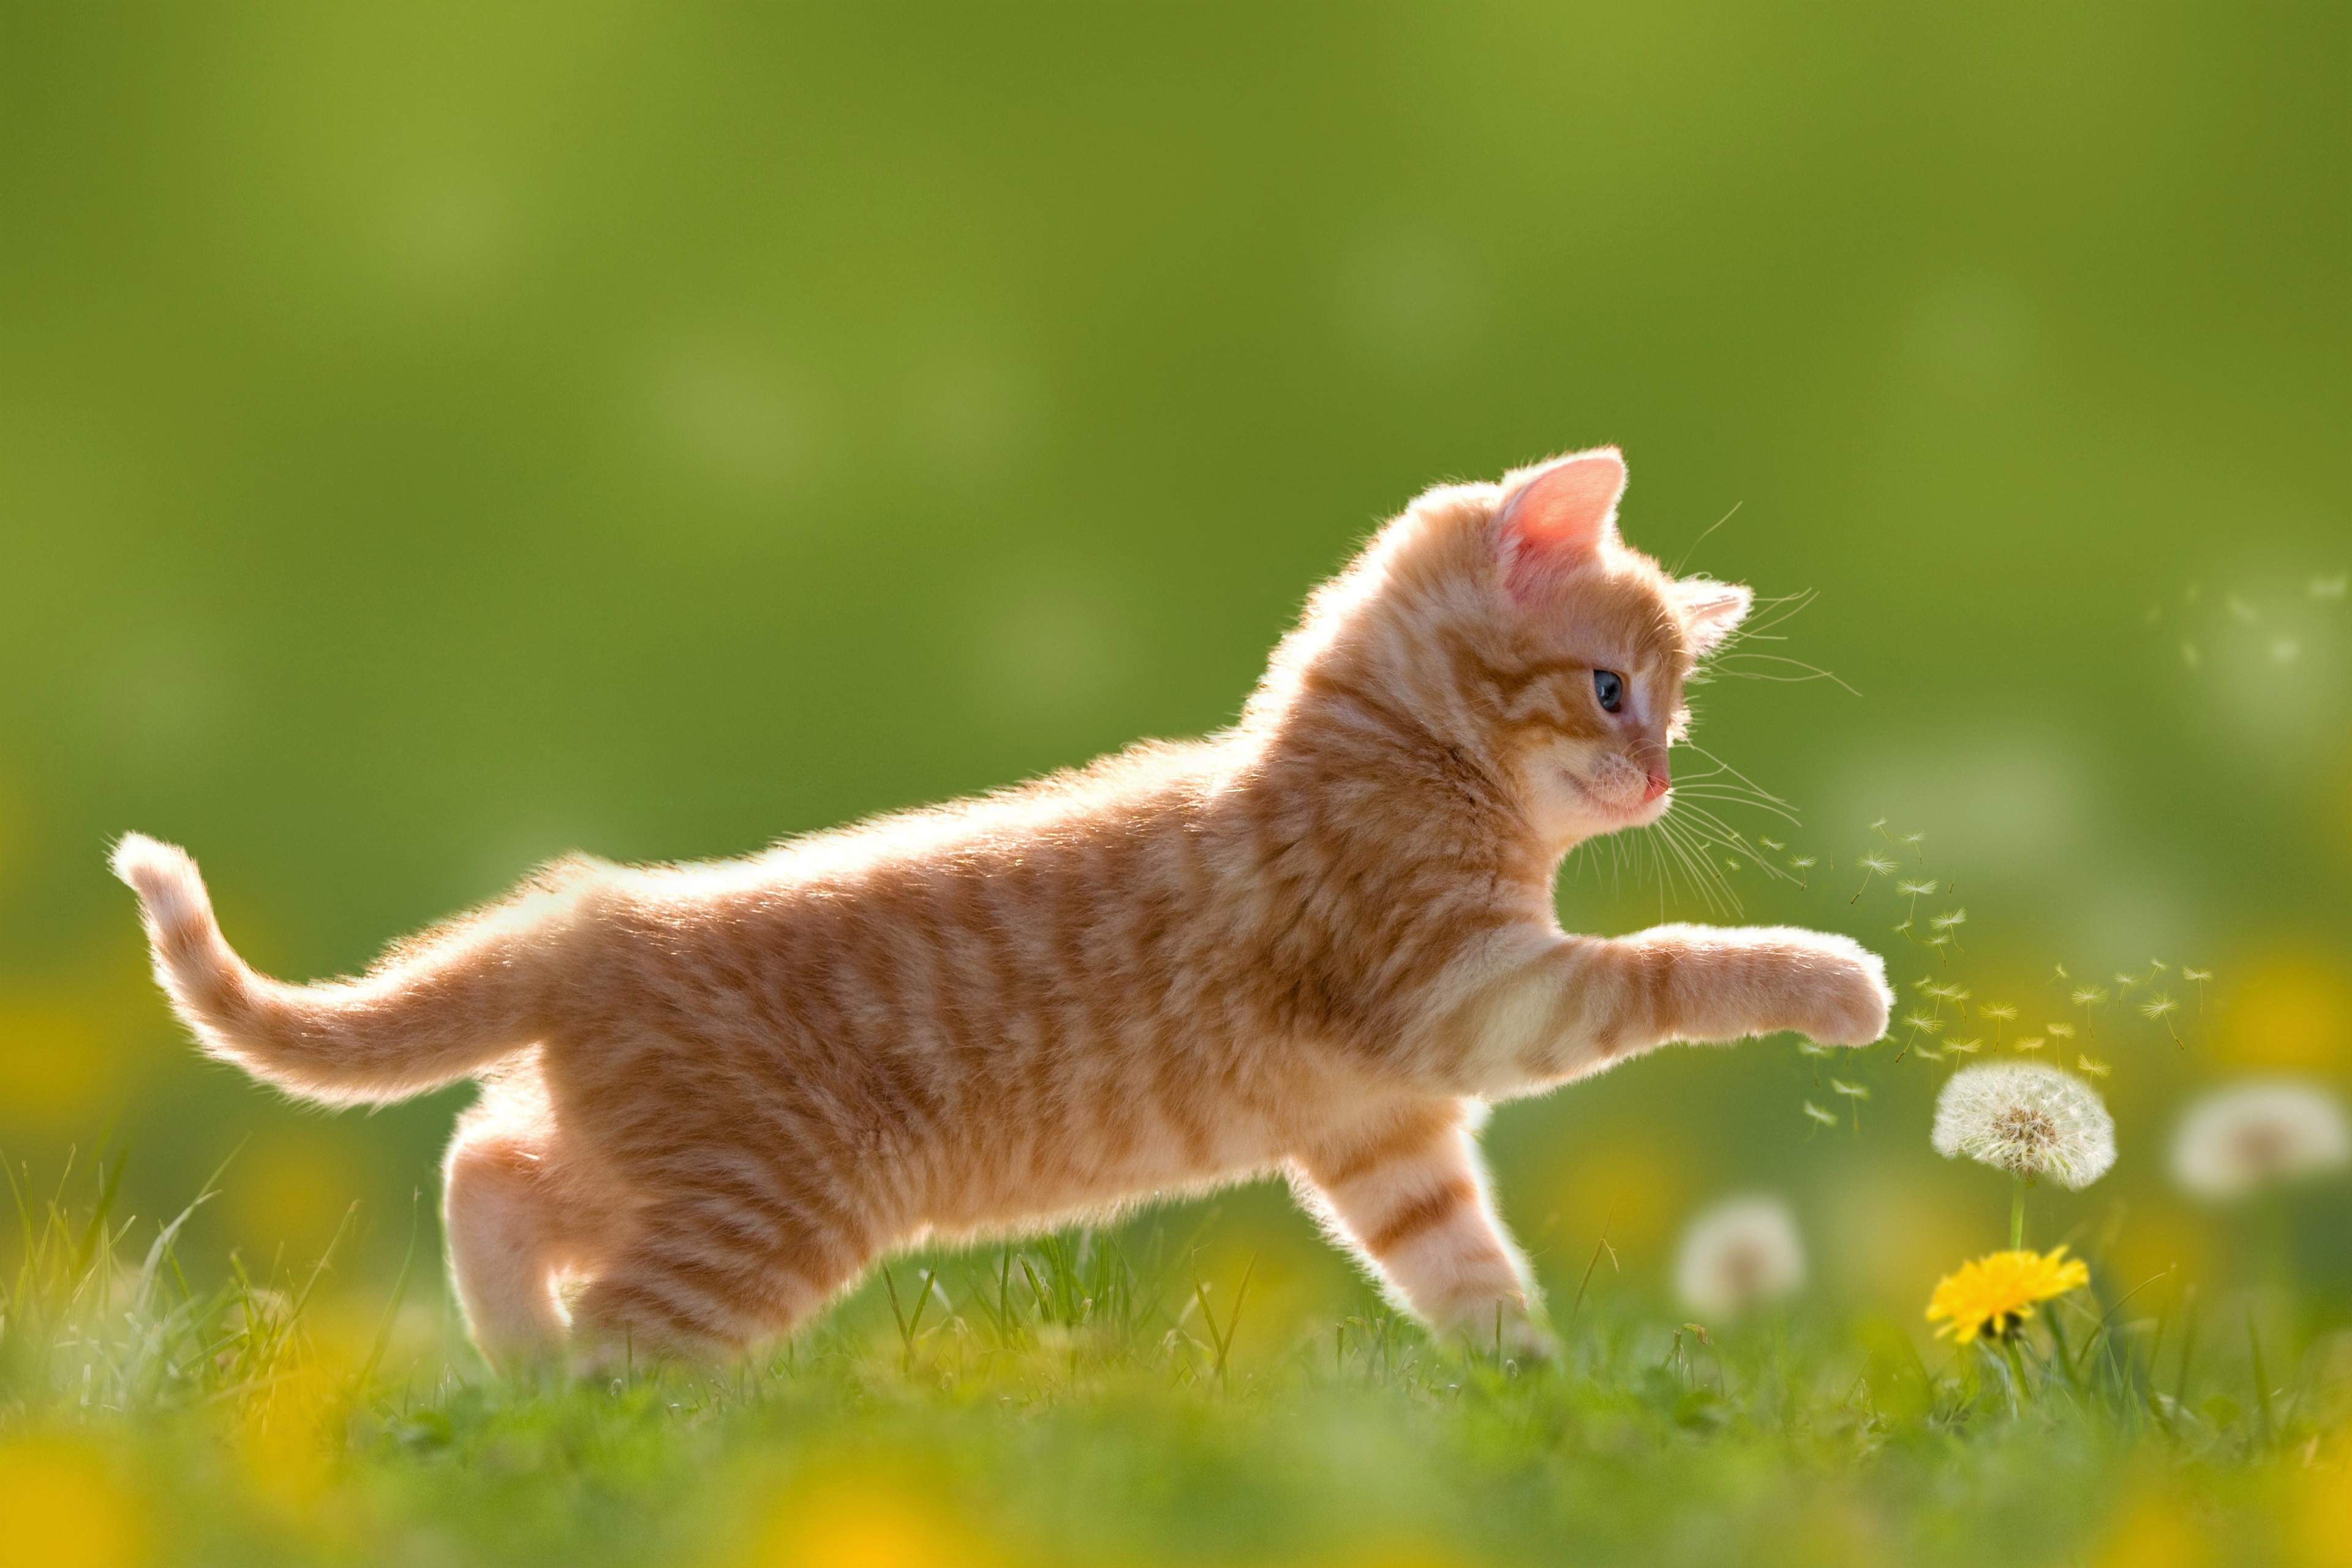 Wallpaper Orange Tabby Cat Walking on Green Grass During Daytime, Background Free Image